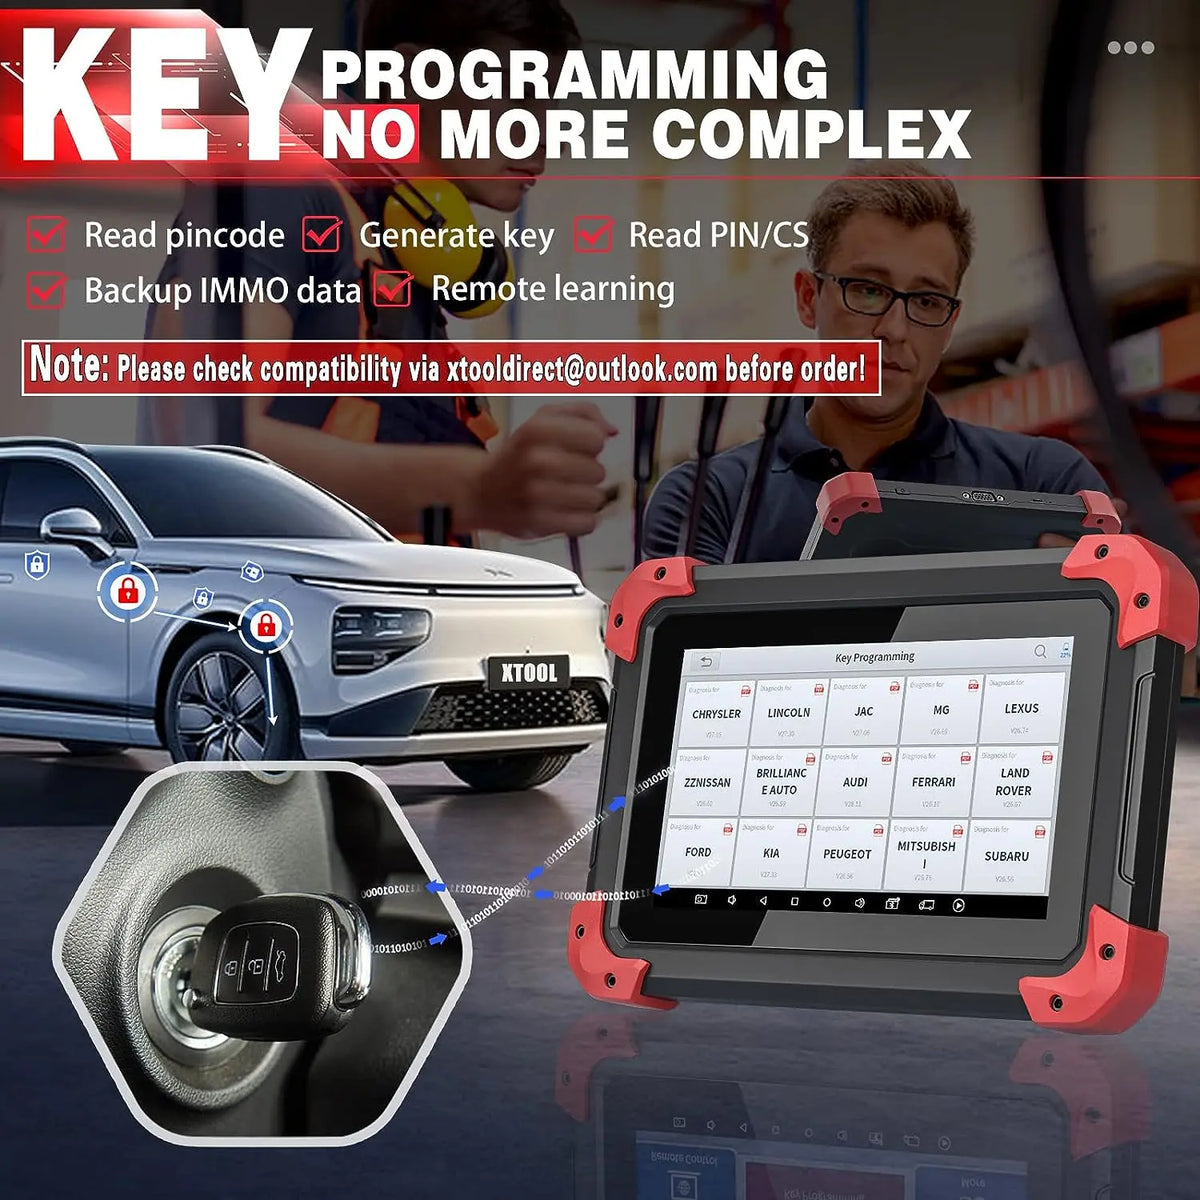 XTOOL X100 Pad Plus Auto Key Programmer All System Diagnostic Scan Tool Xtool